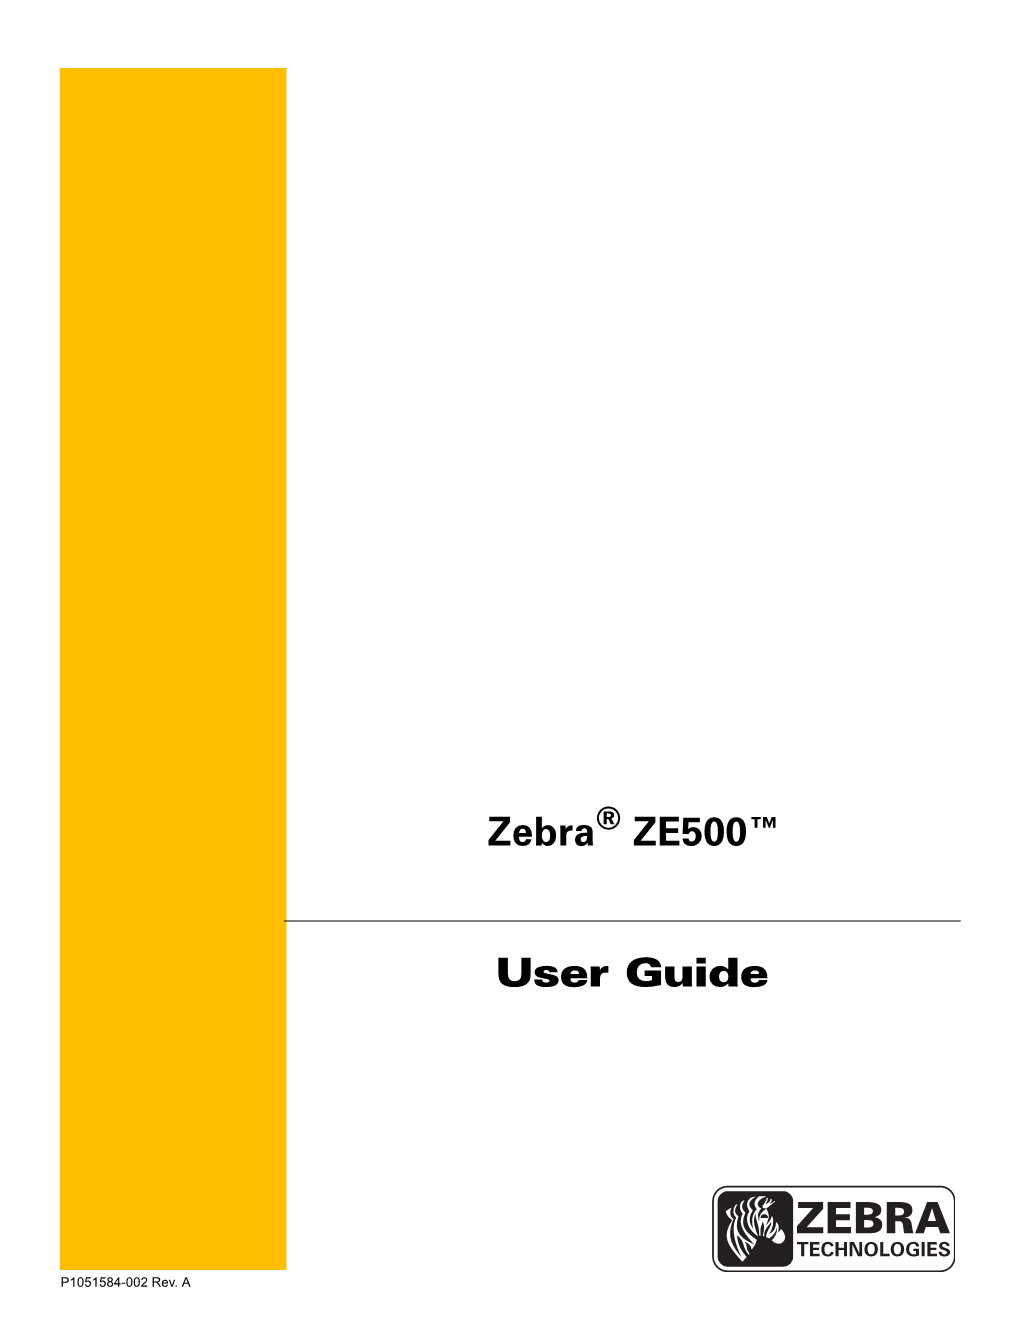 Zebra ZE500 User Guide